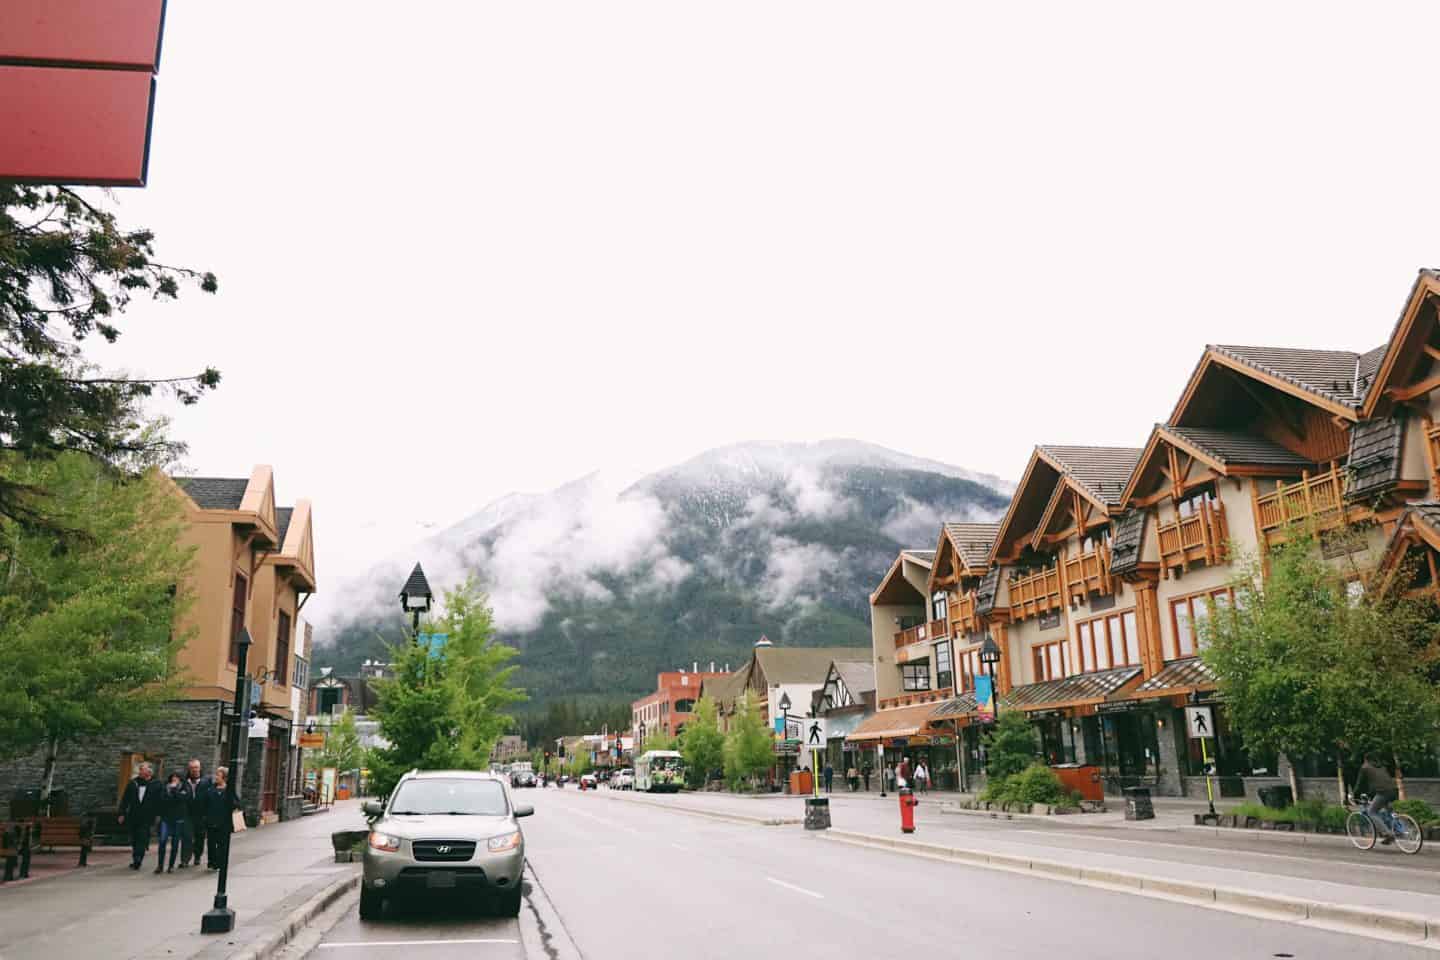 Town of Banff, Alberta